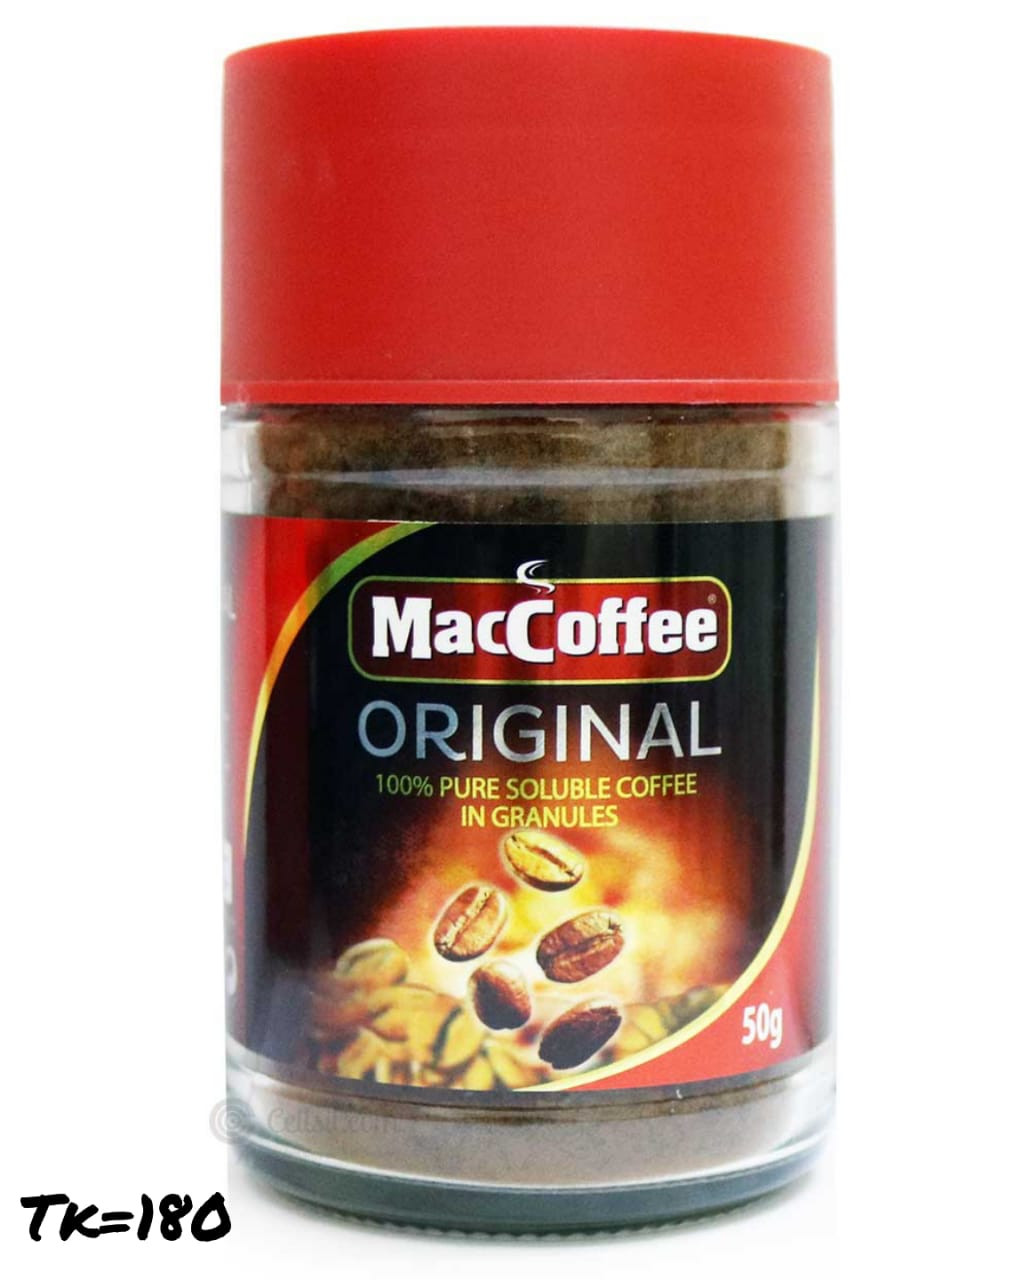 MacCoffee Original 100% pure soluble coffee in Granules 50gm Jar